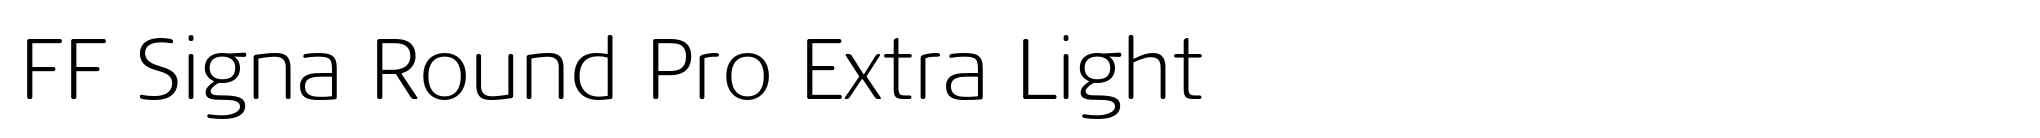 FF Signa Round Pro Extra Light image